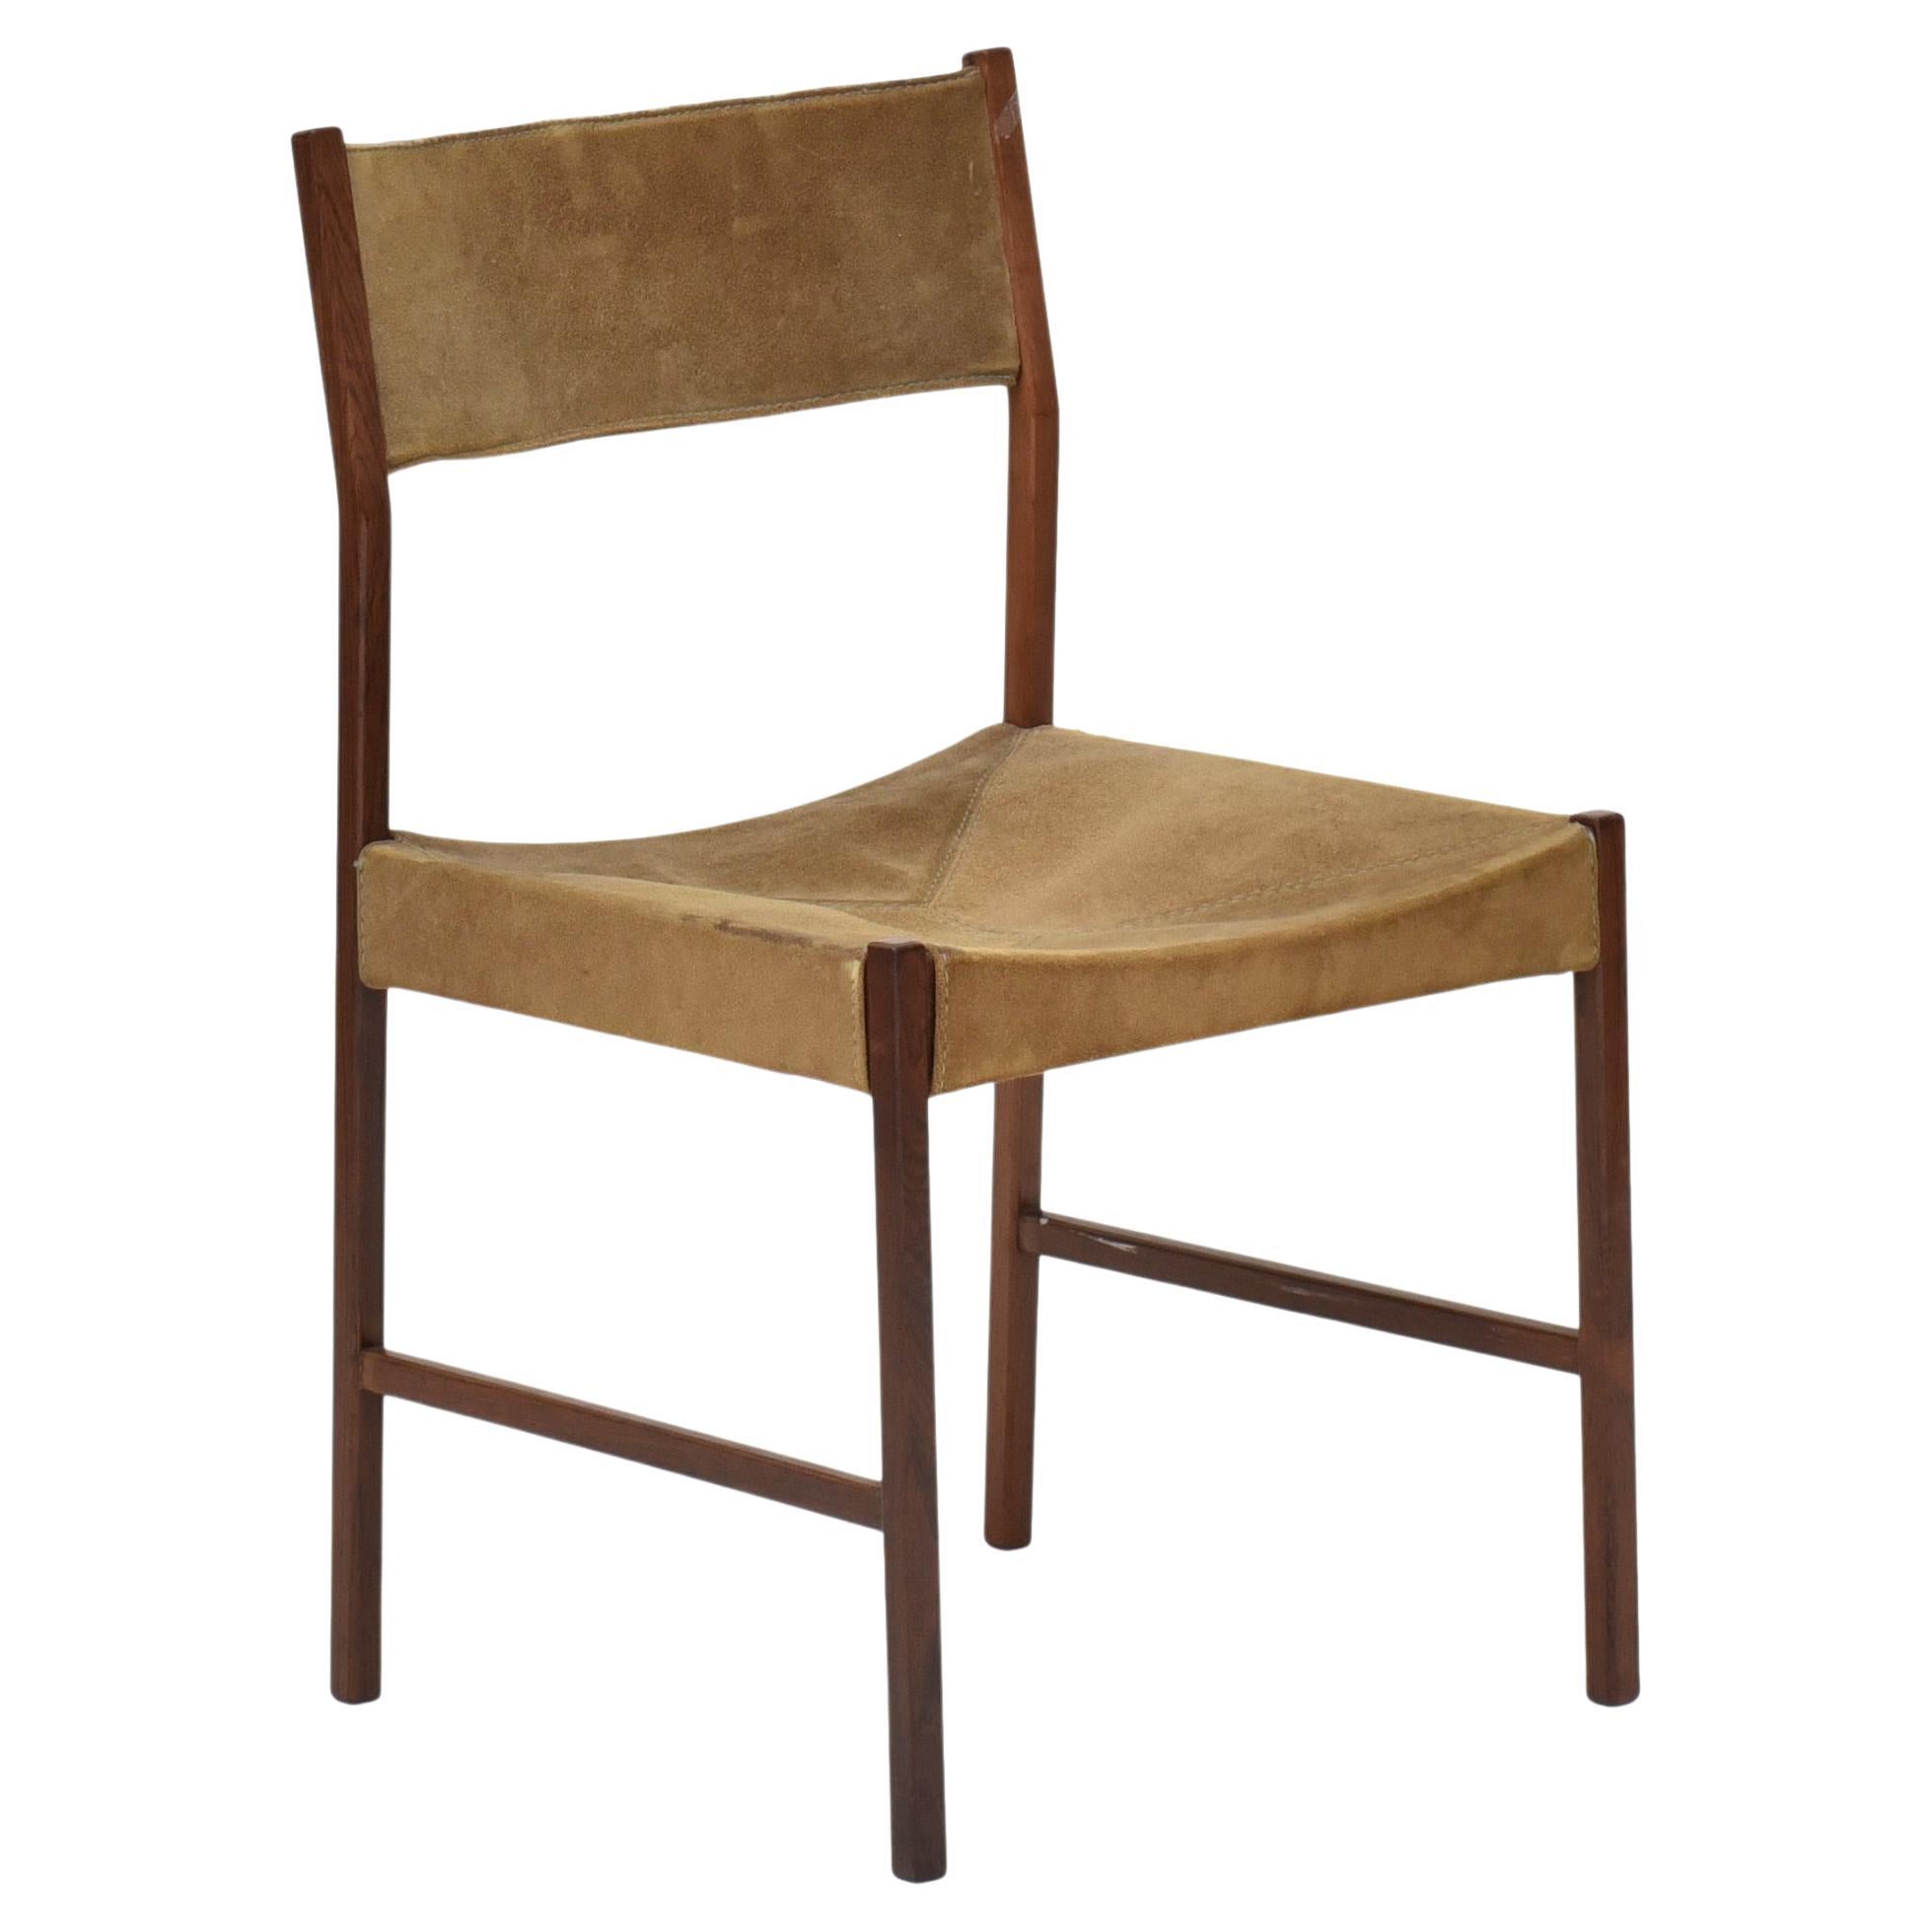 Chair "Itamaraty" in Brazilian Wood, by L'atelier - Jorge Zalszupin